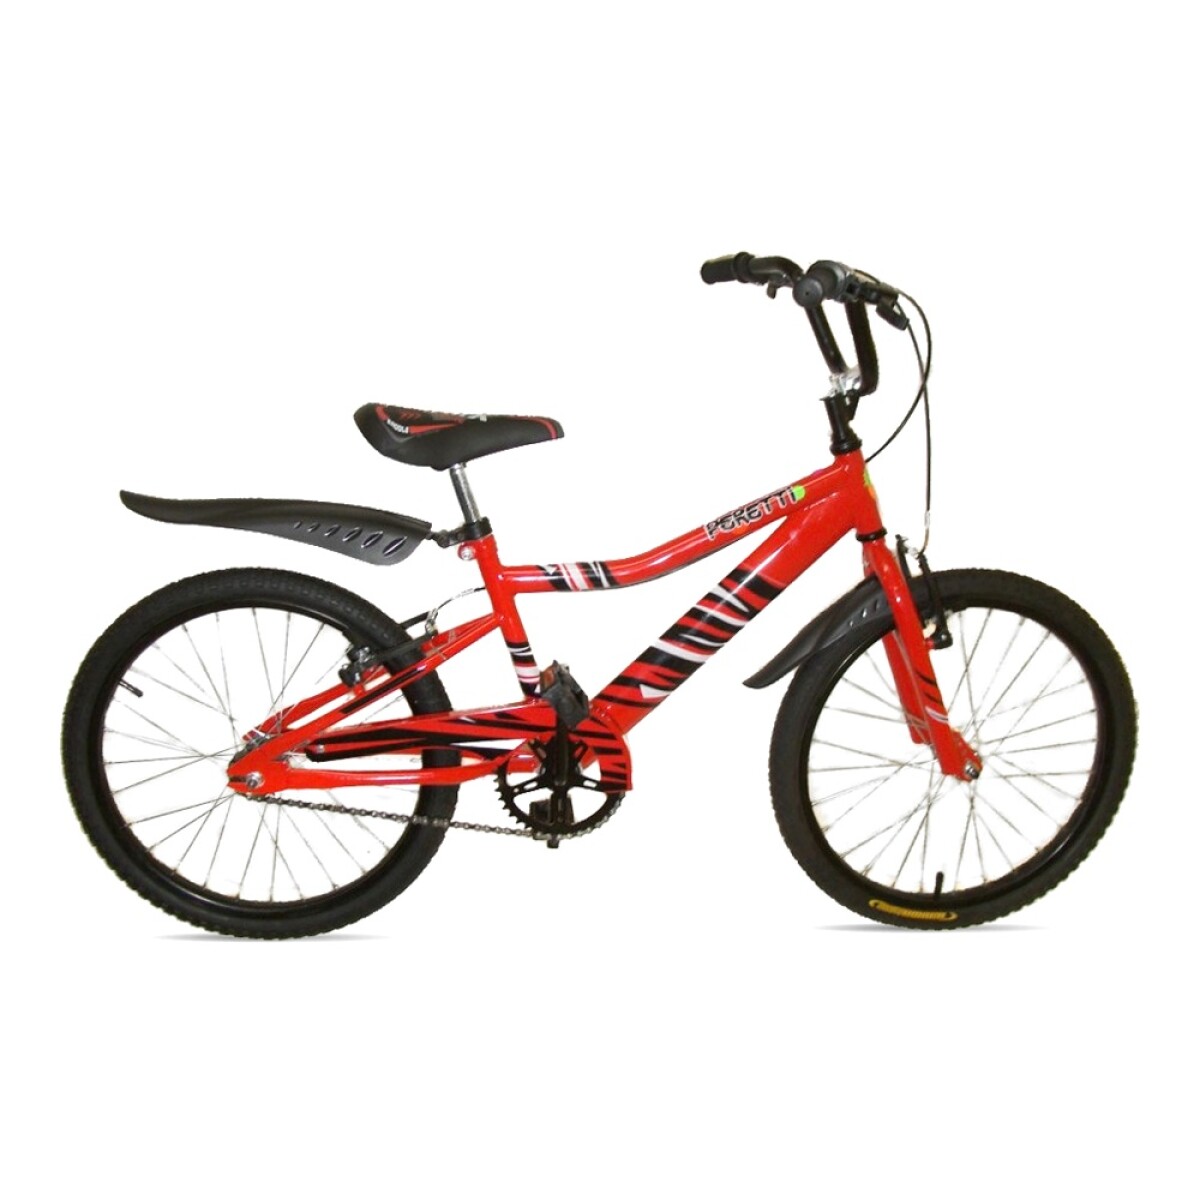 Bicicleta para Niños Peretti Modelo Cros Rodado 20 en Acero - Rojo 